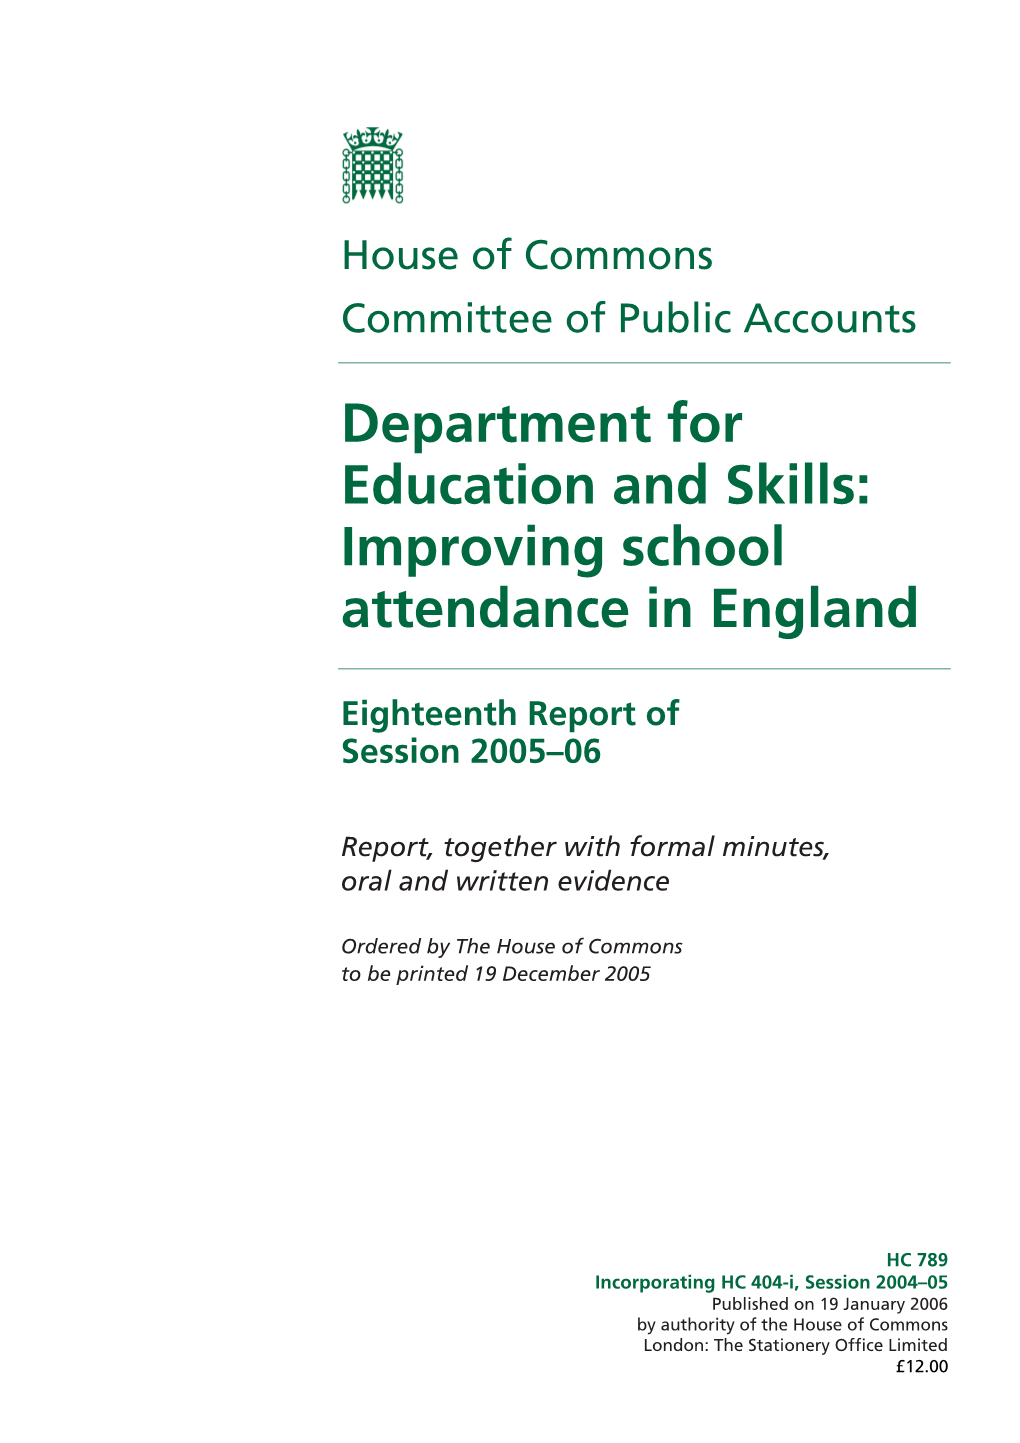 Improving School Attendance in England